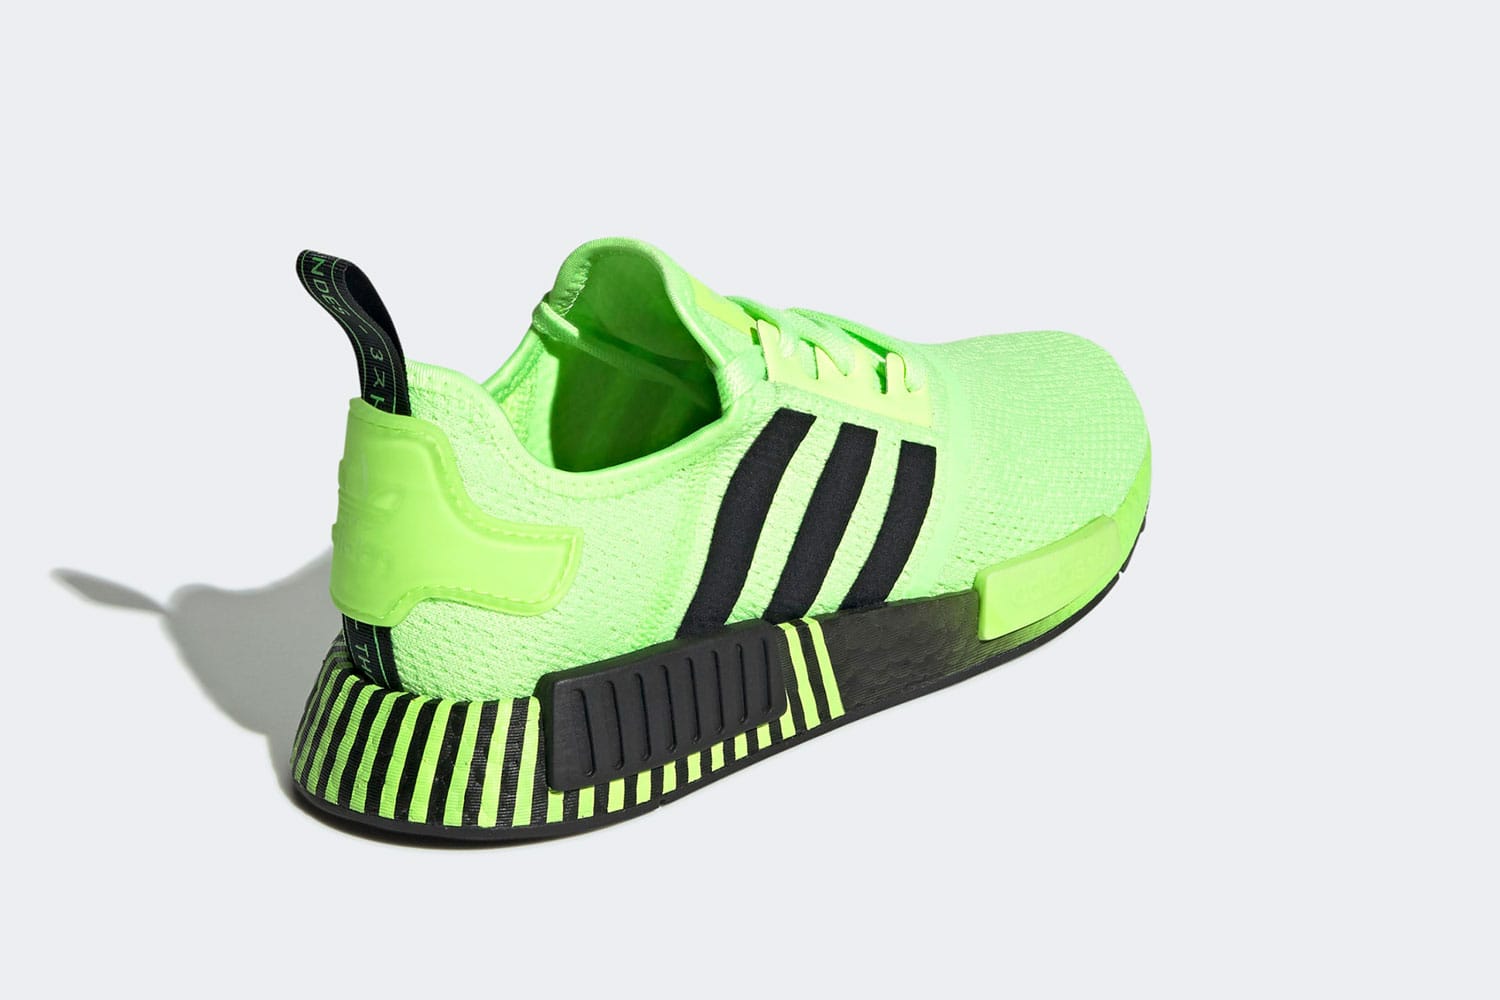 adidas nmd r1 black and green